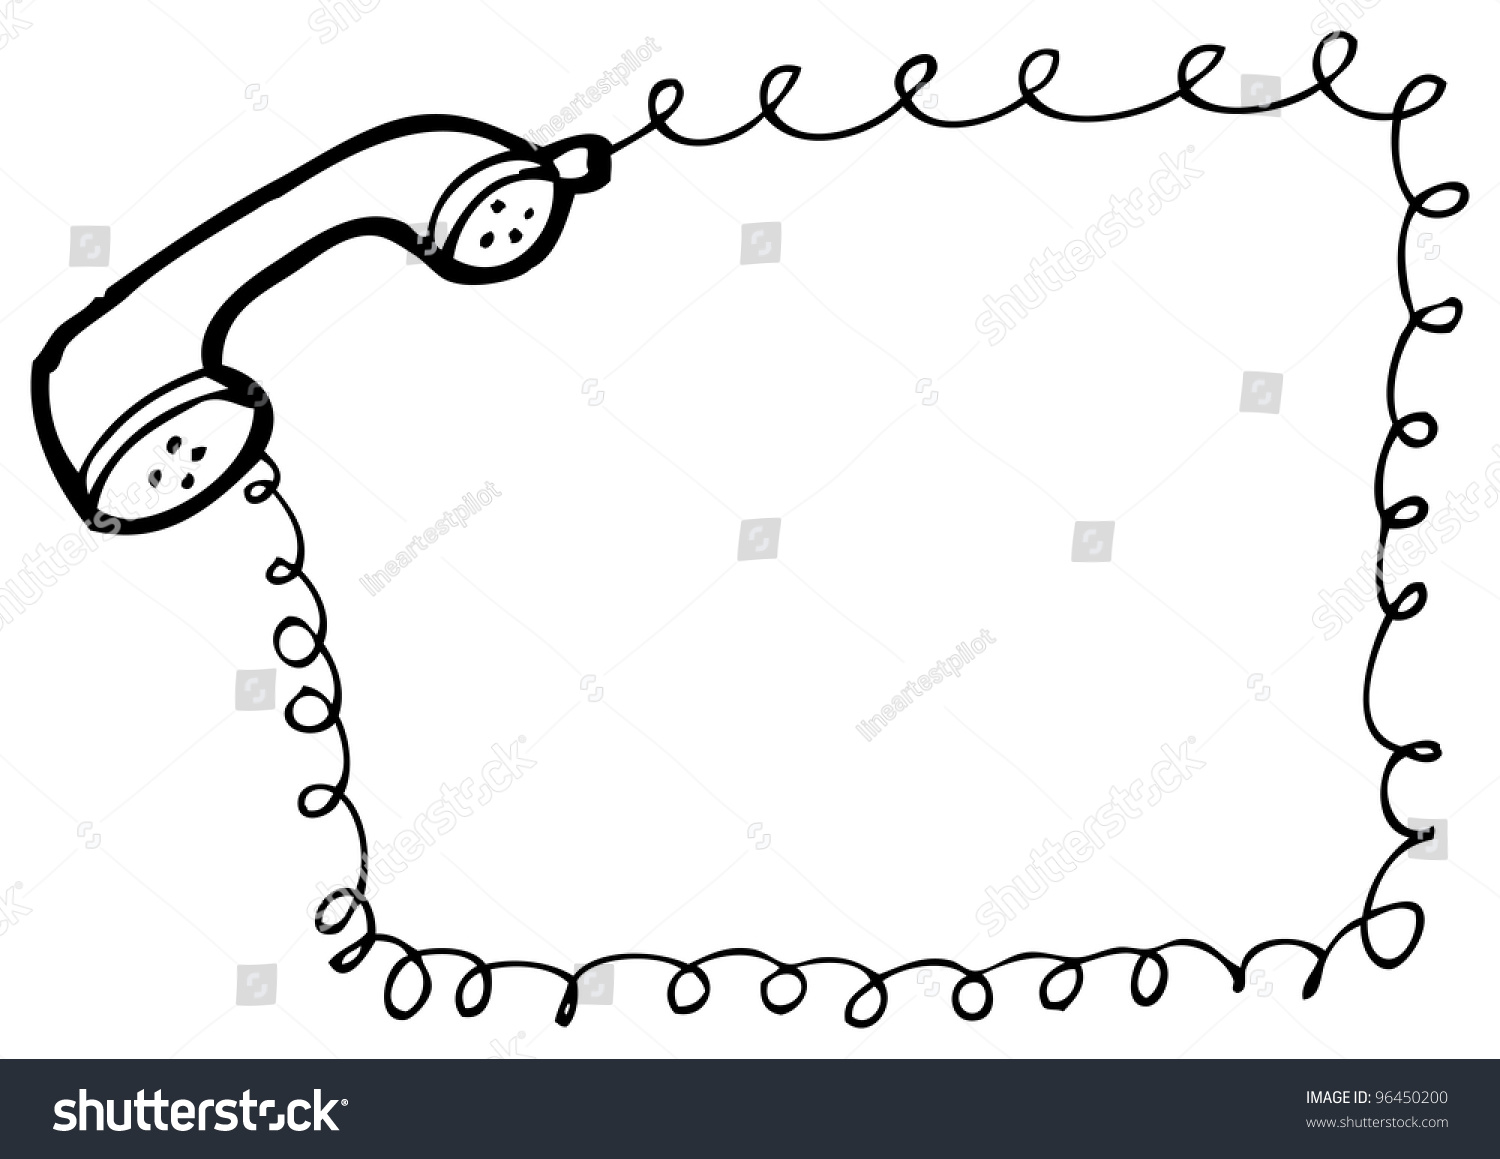 phone cord clip art - photo #42